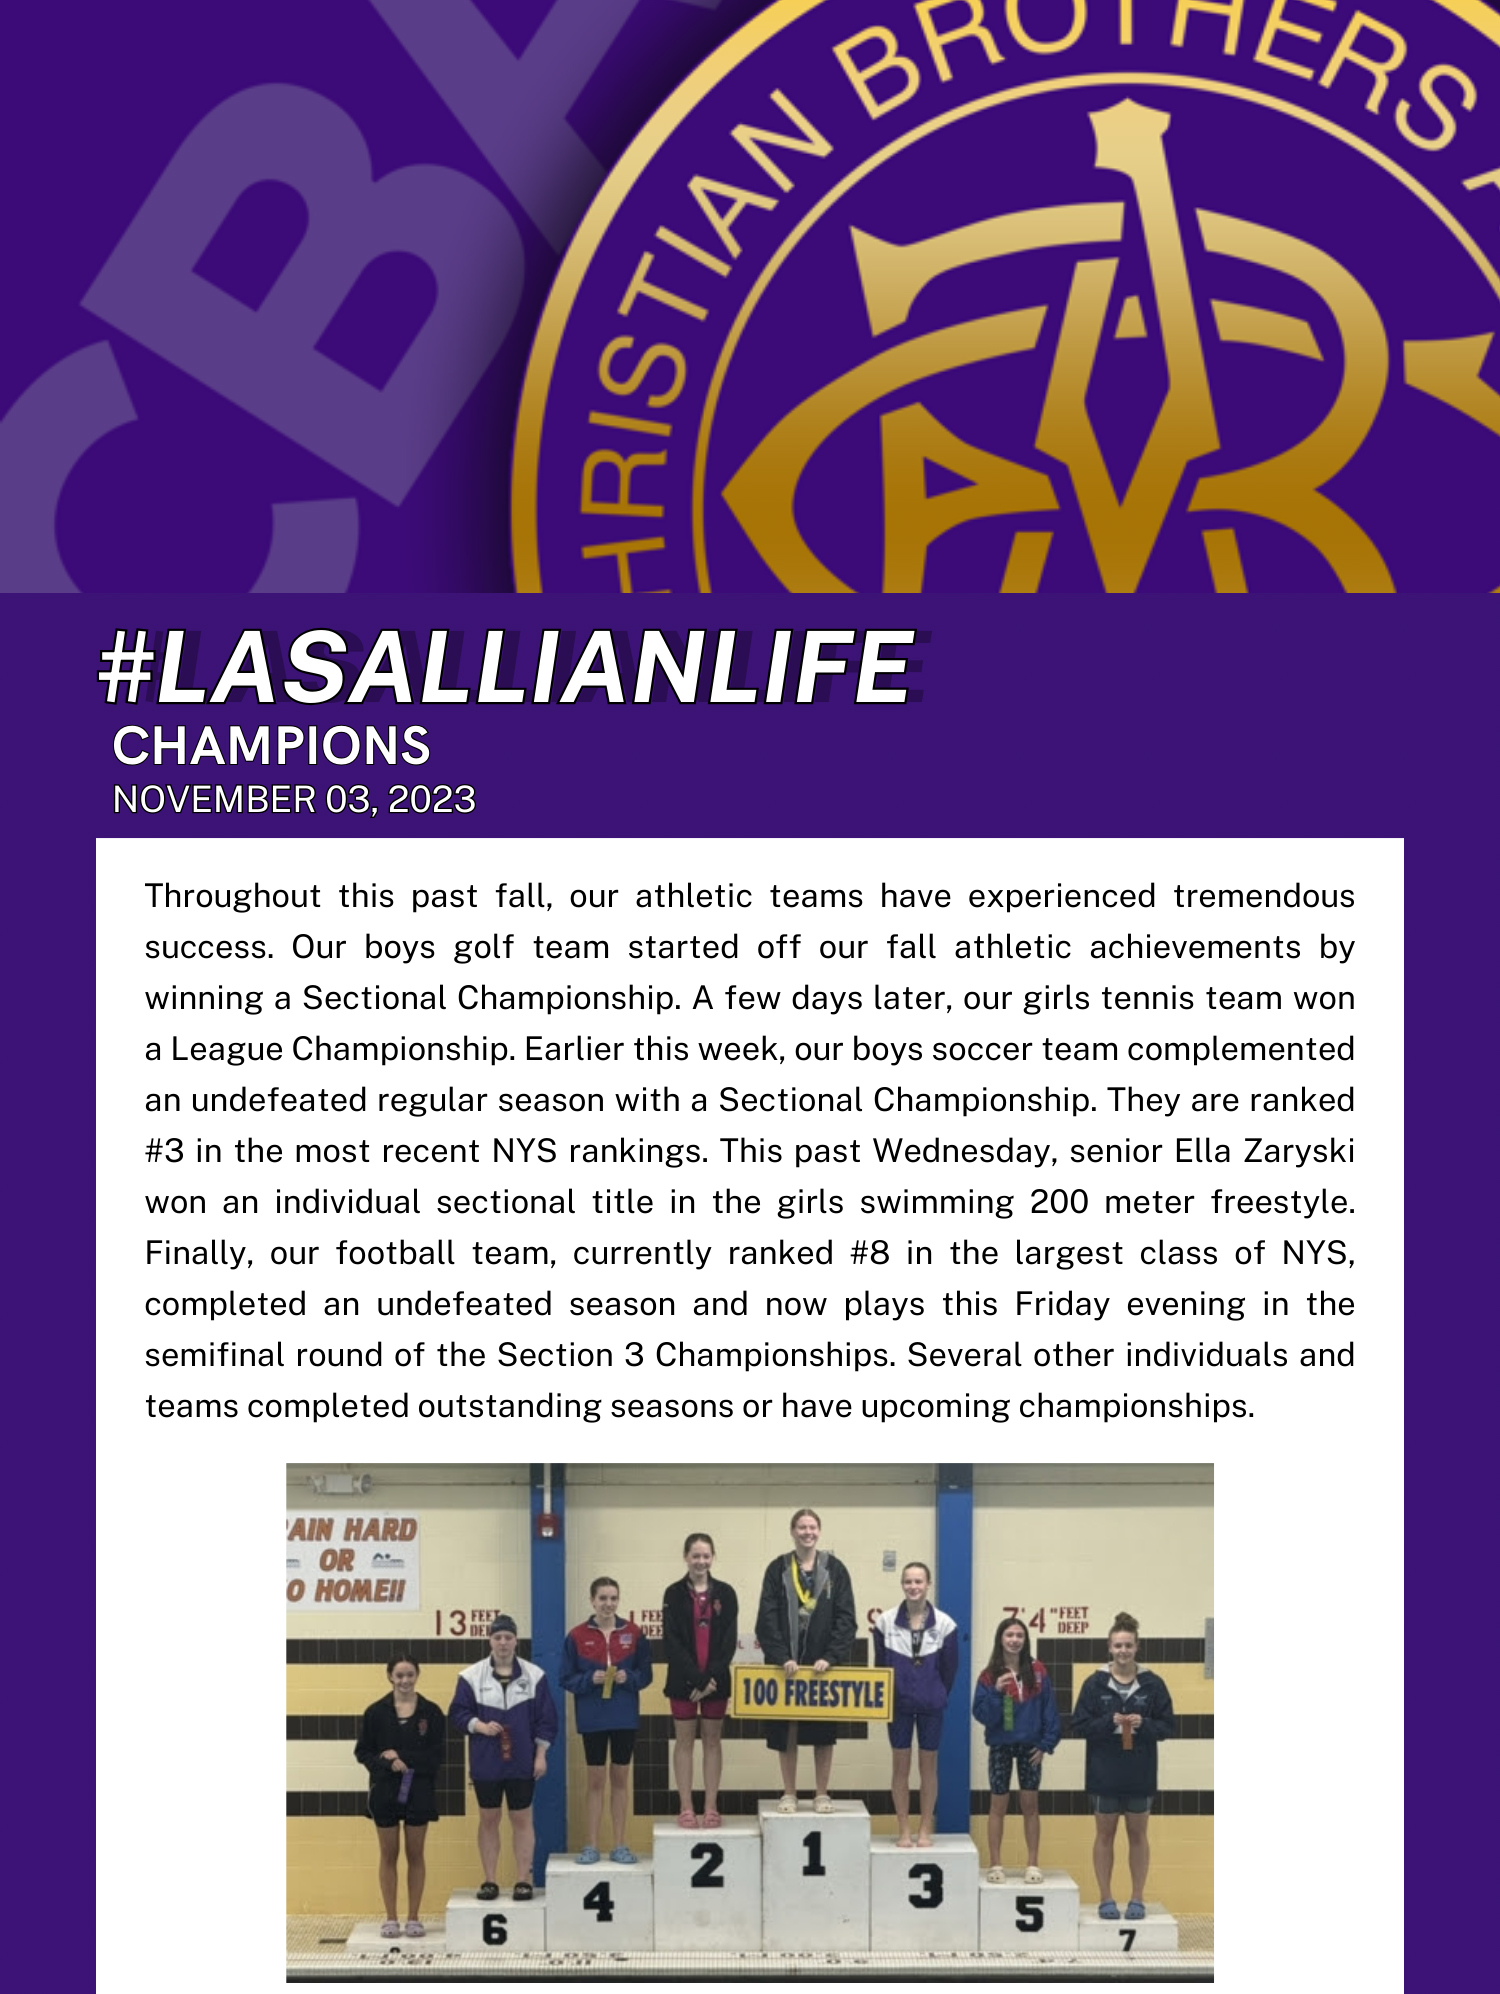 #LasallianLife : Champions